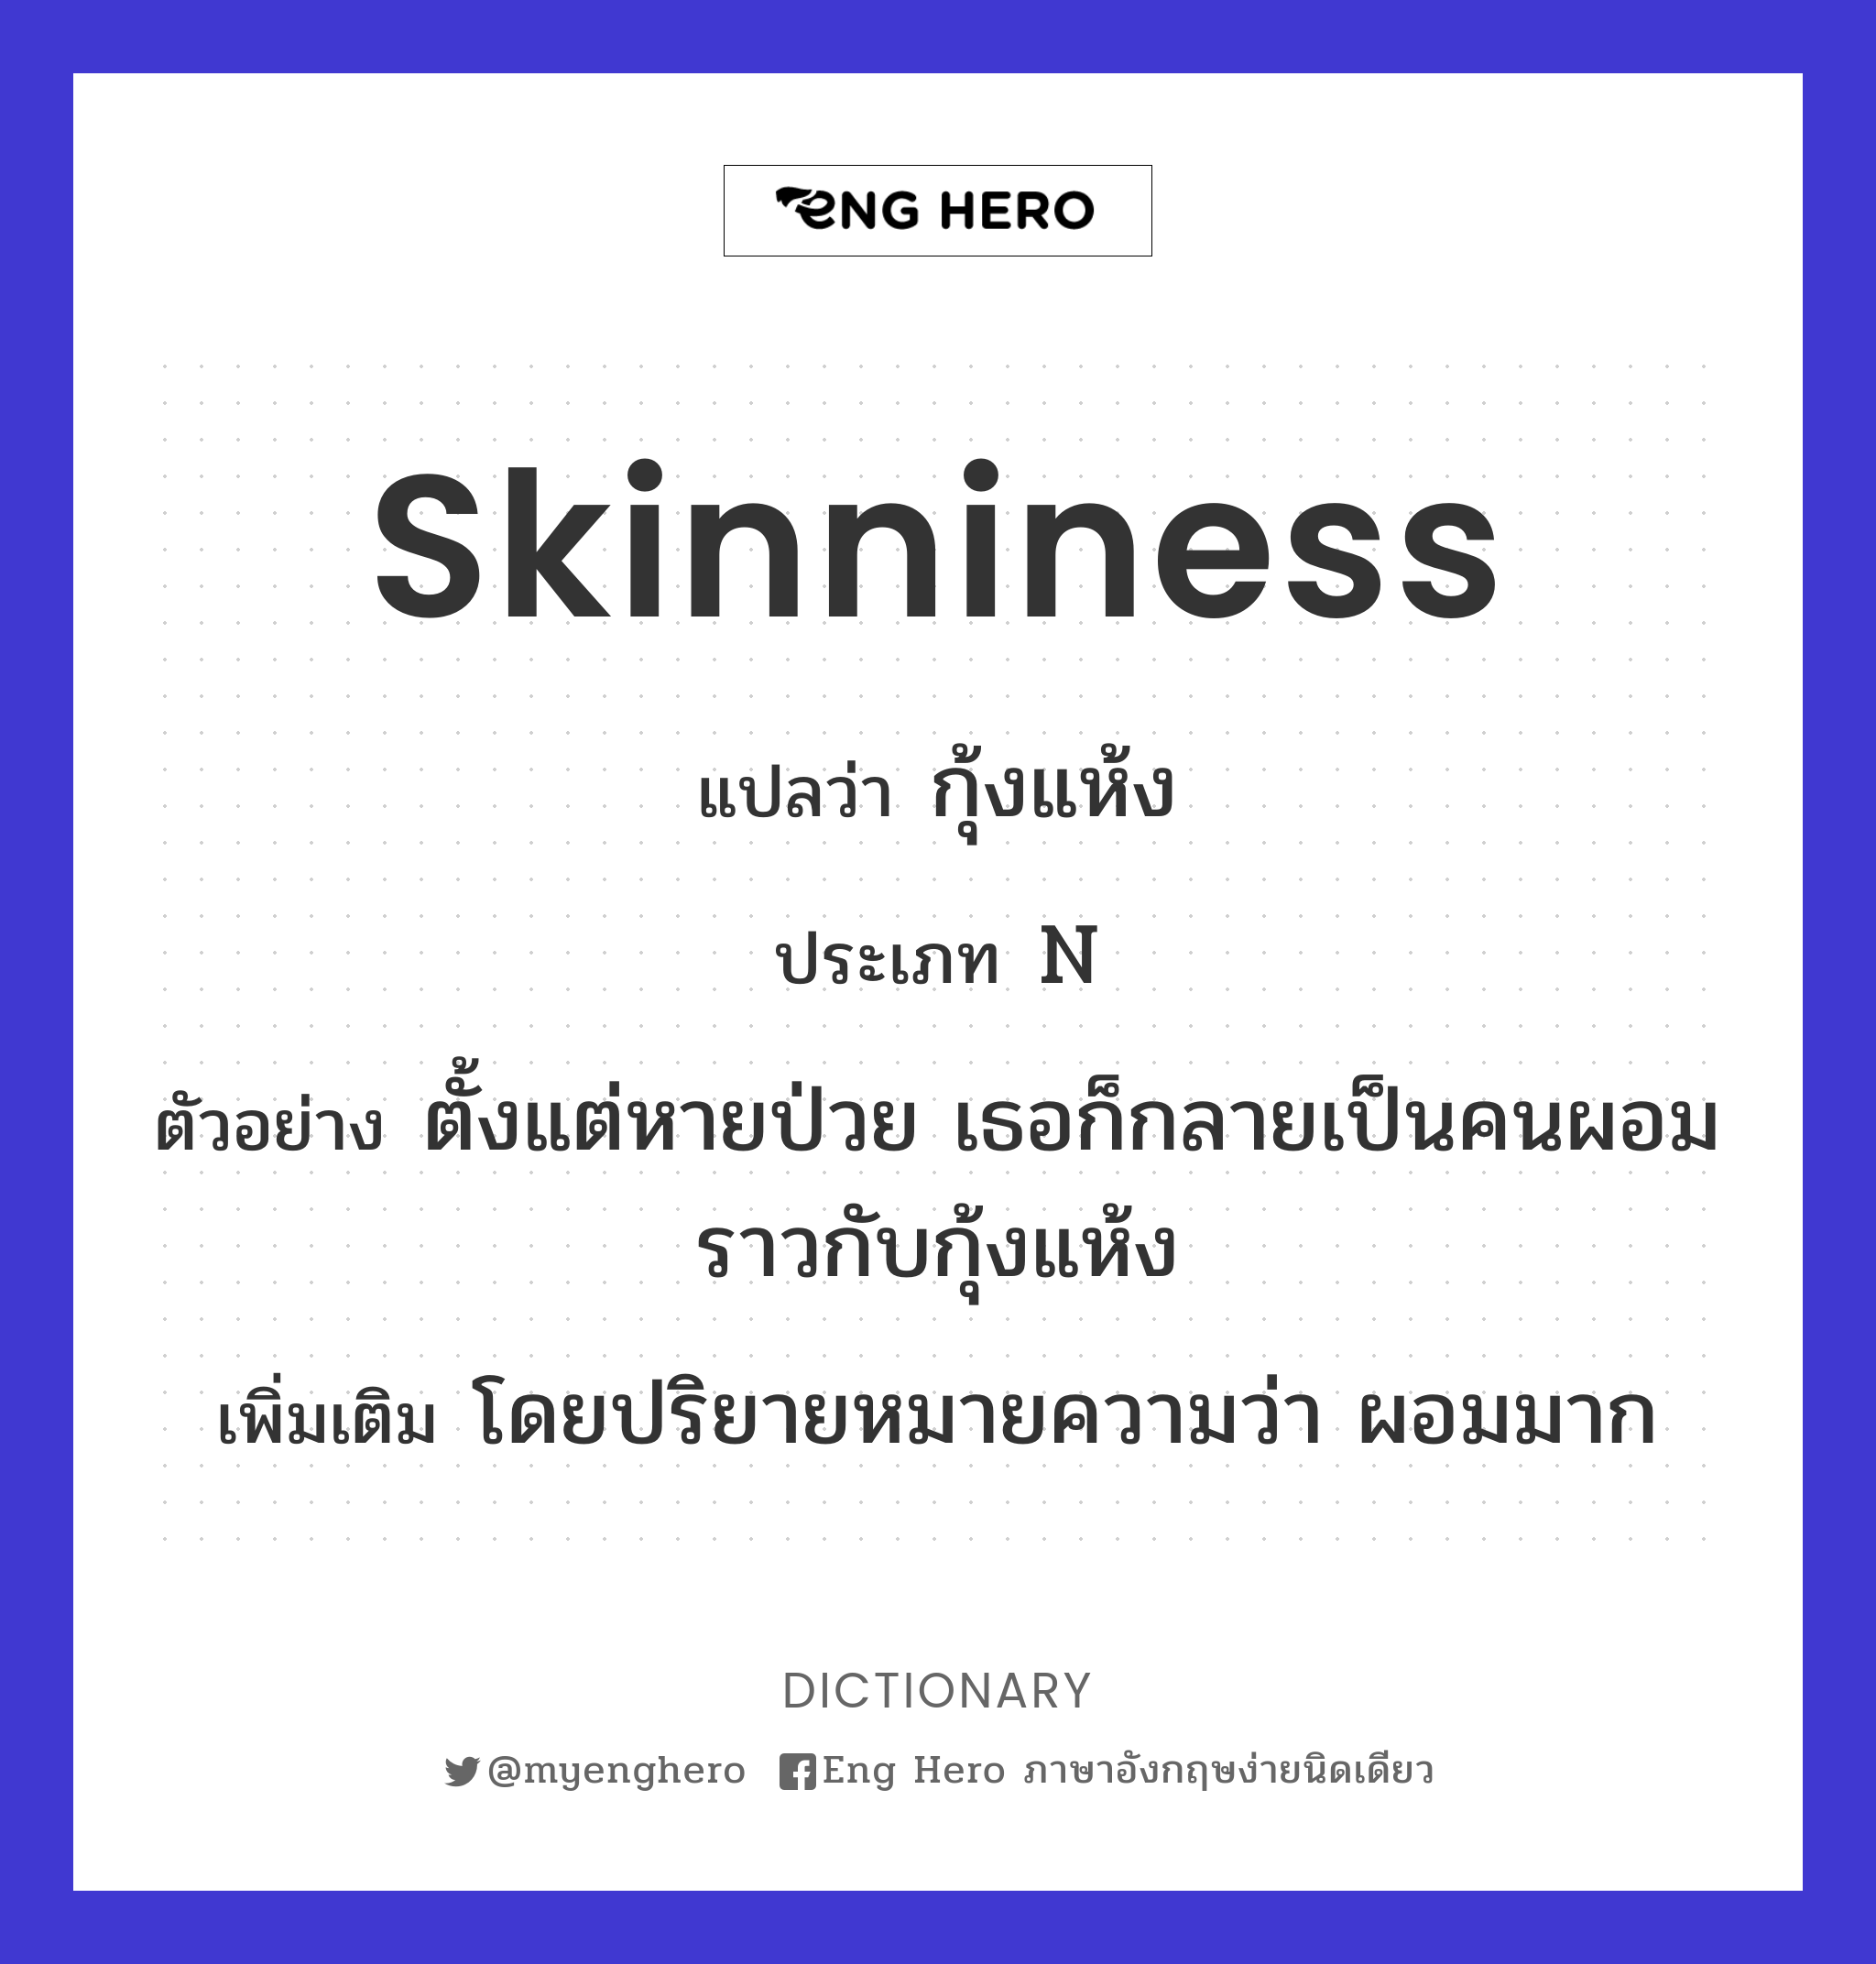 skinniness